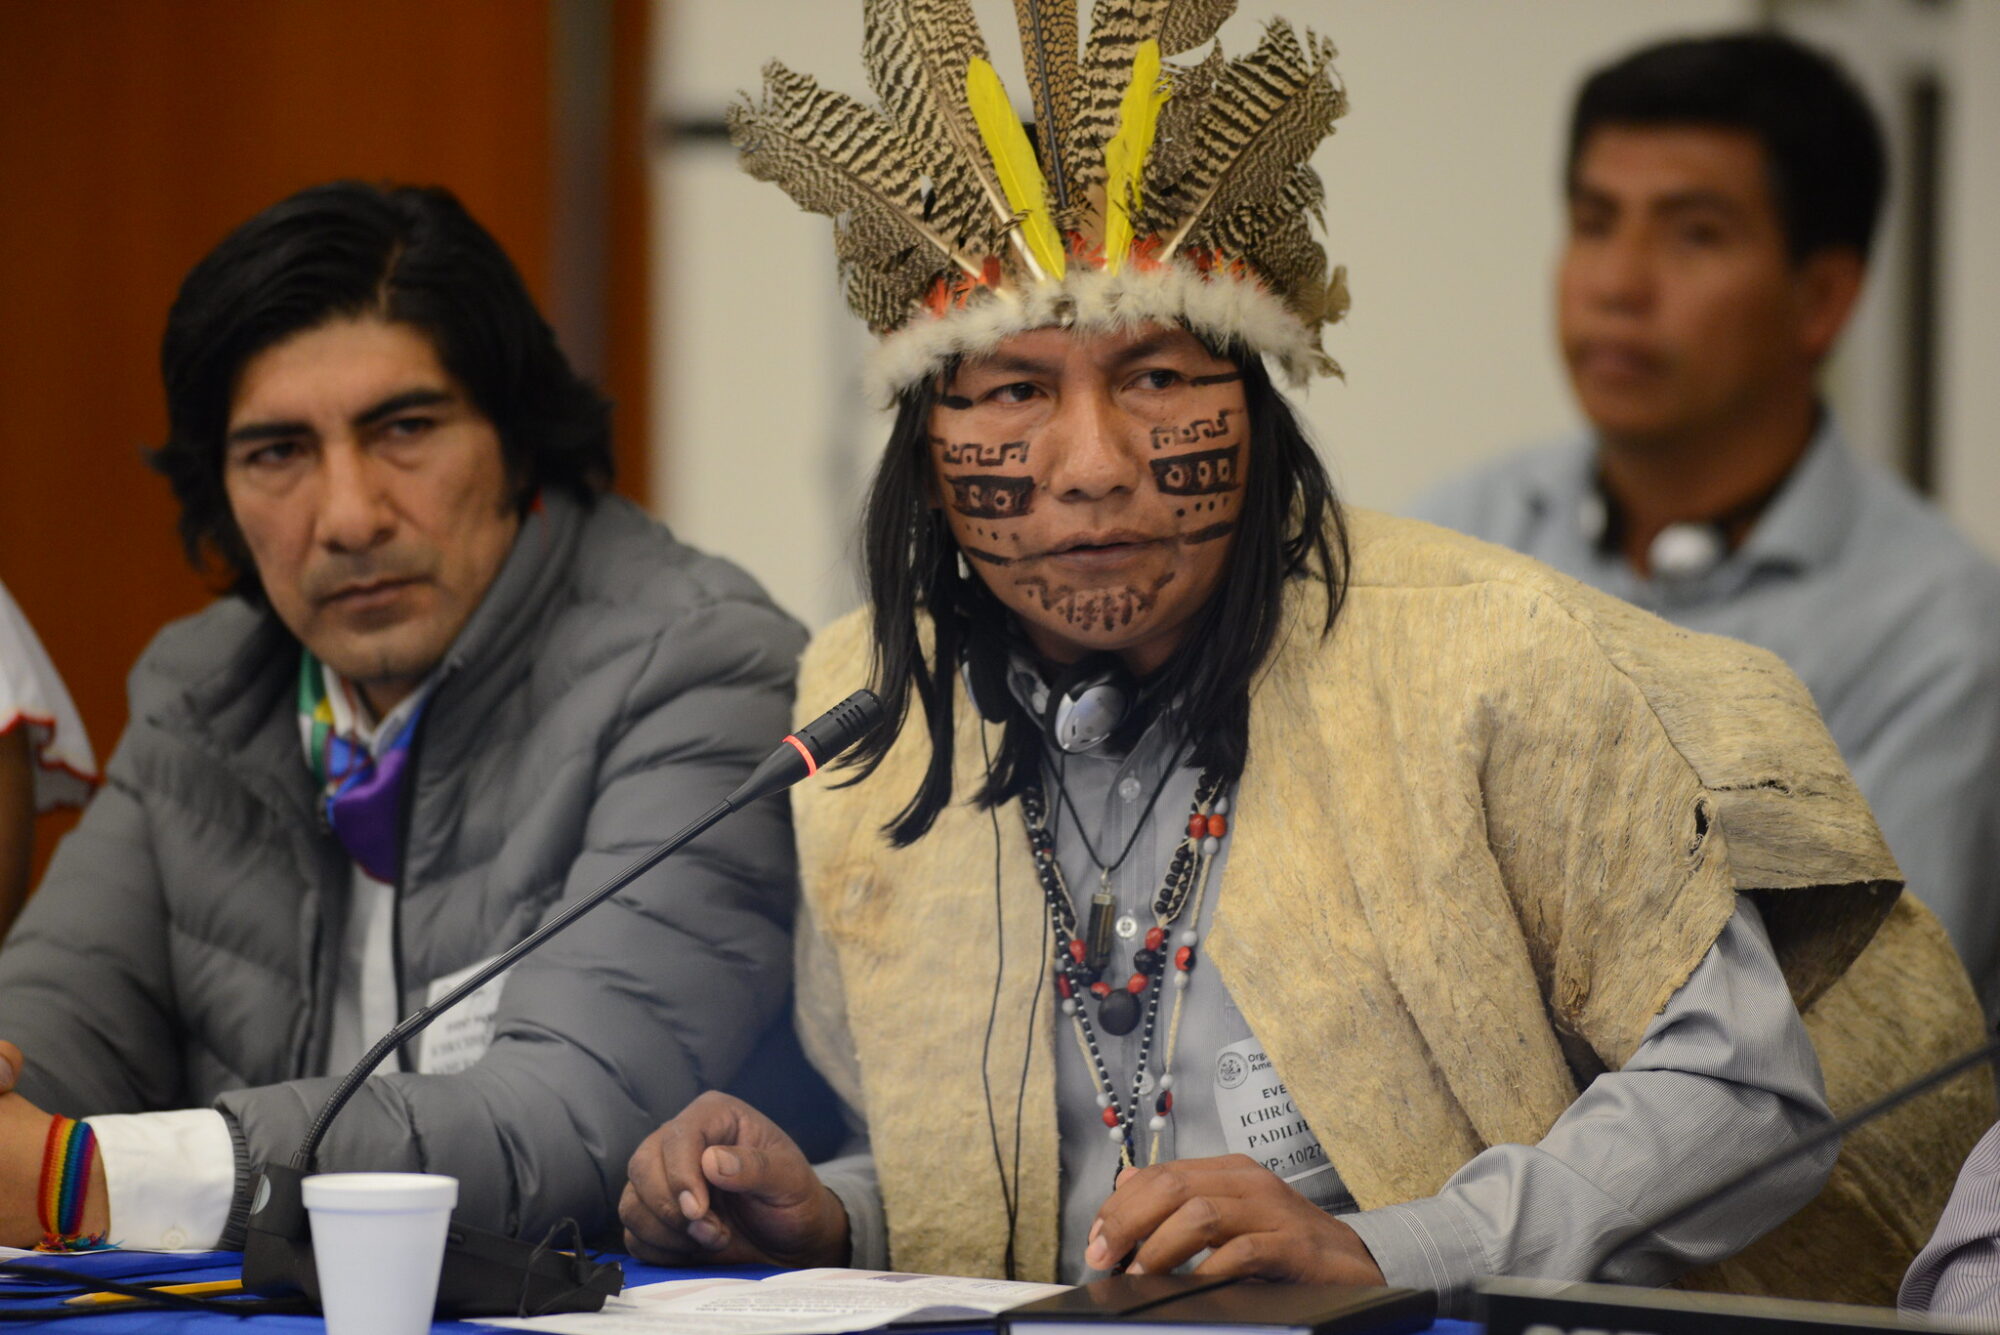 Manari Ushigua of the Sápara Indigenous people speaks in Washington DC in 2014